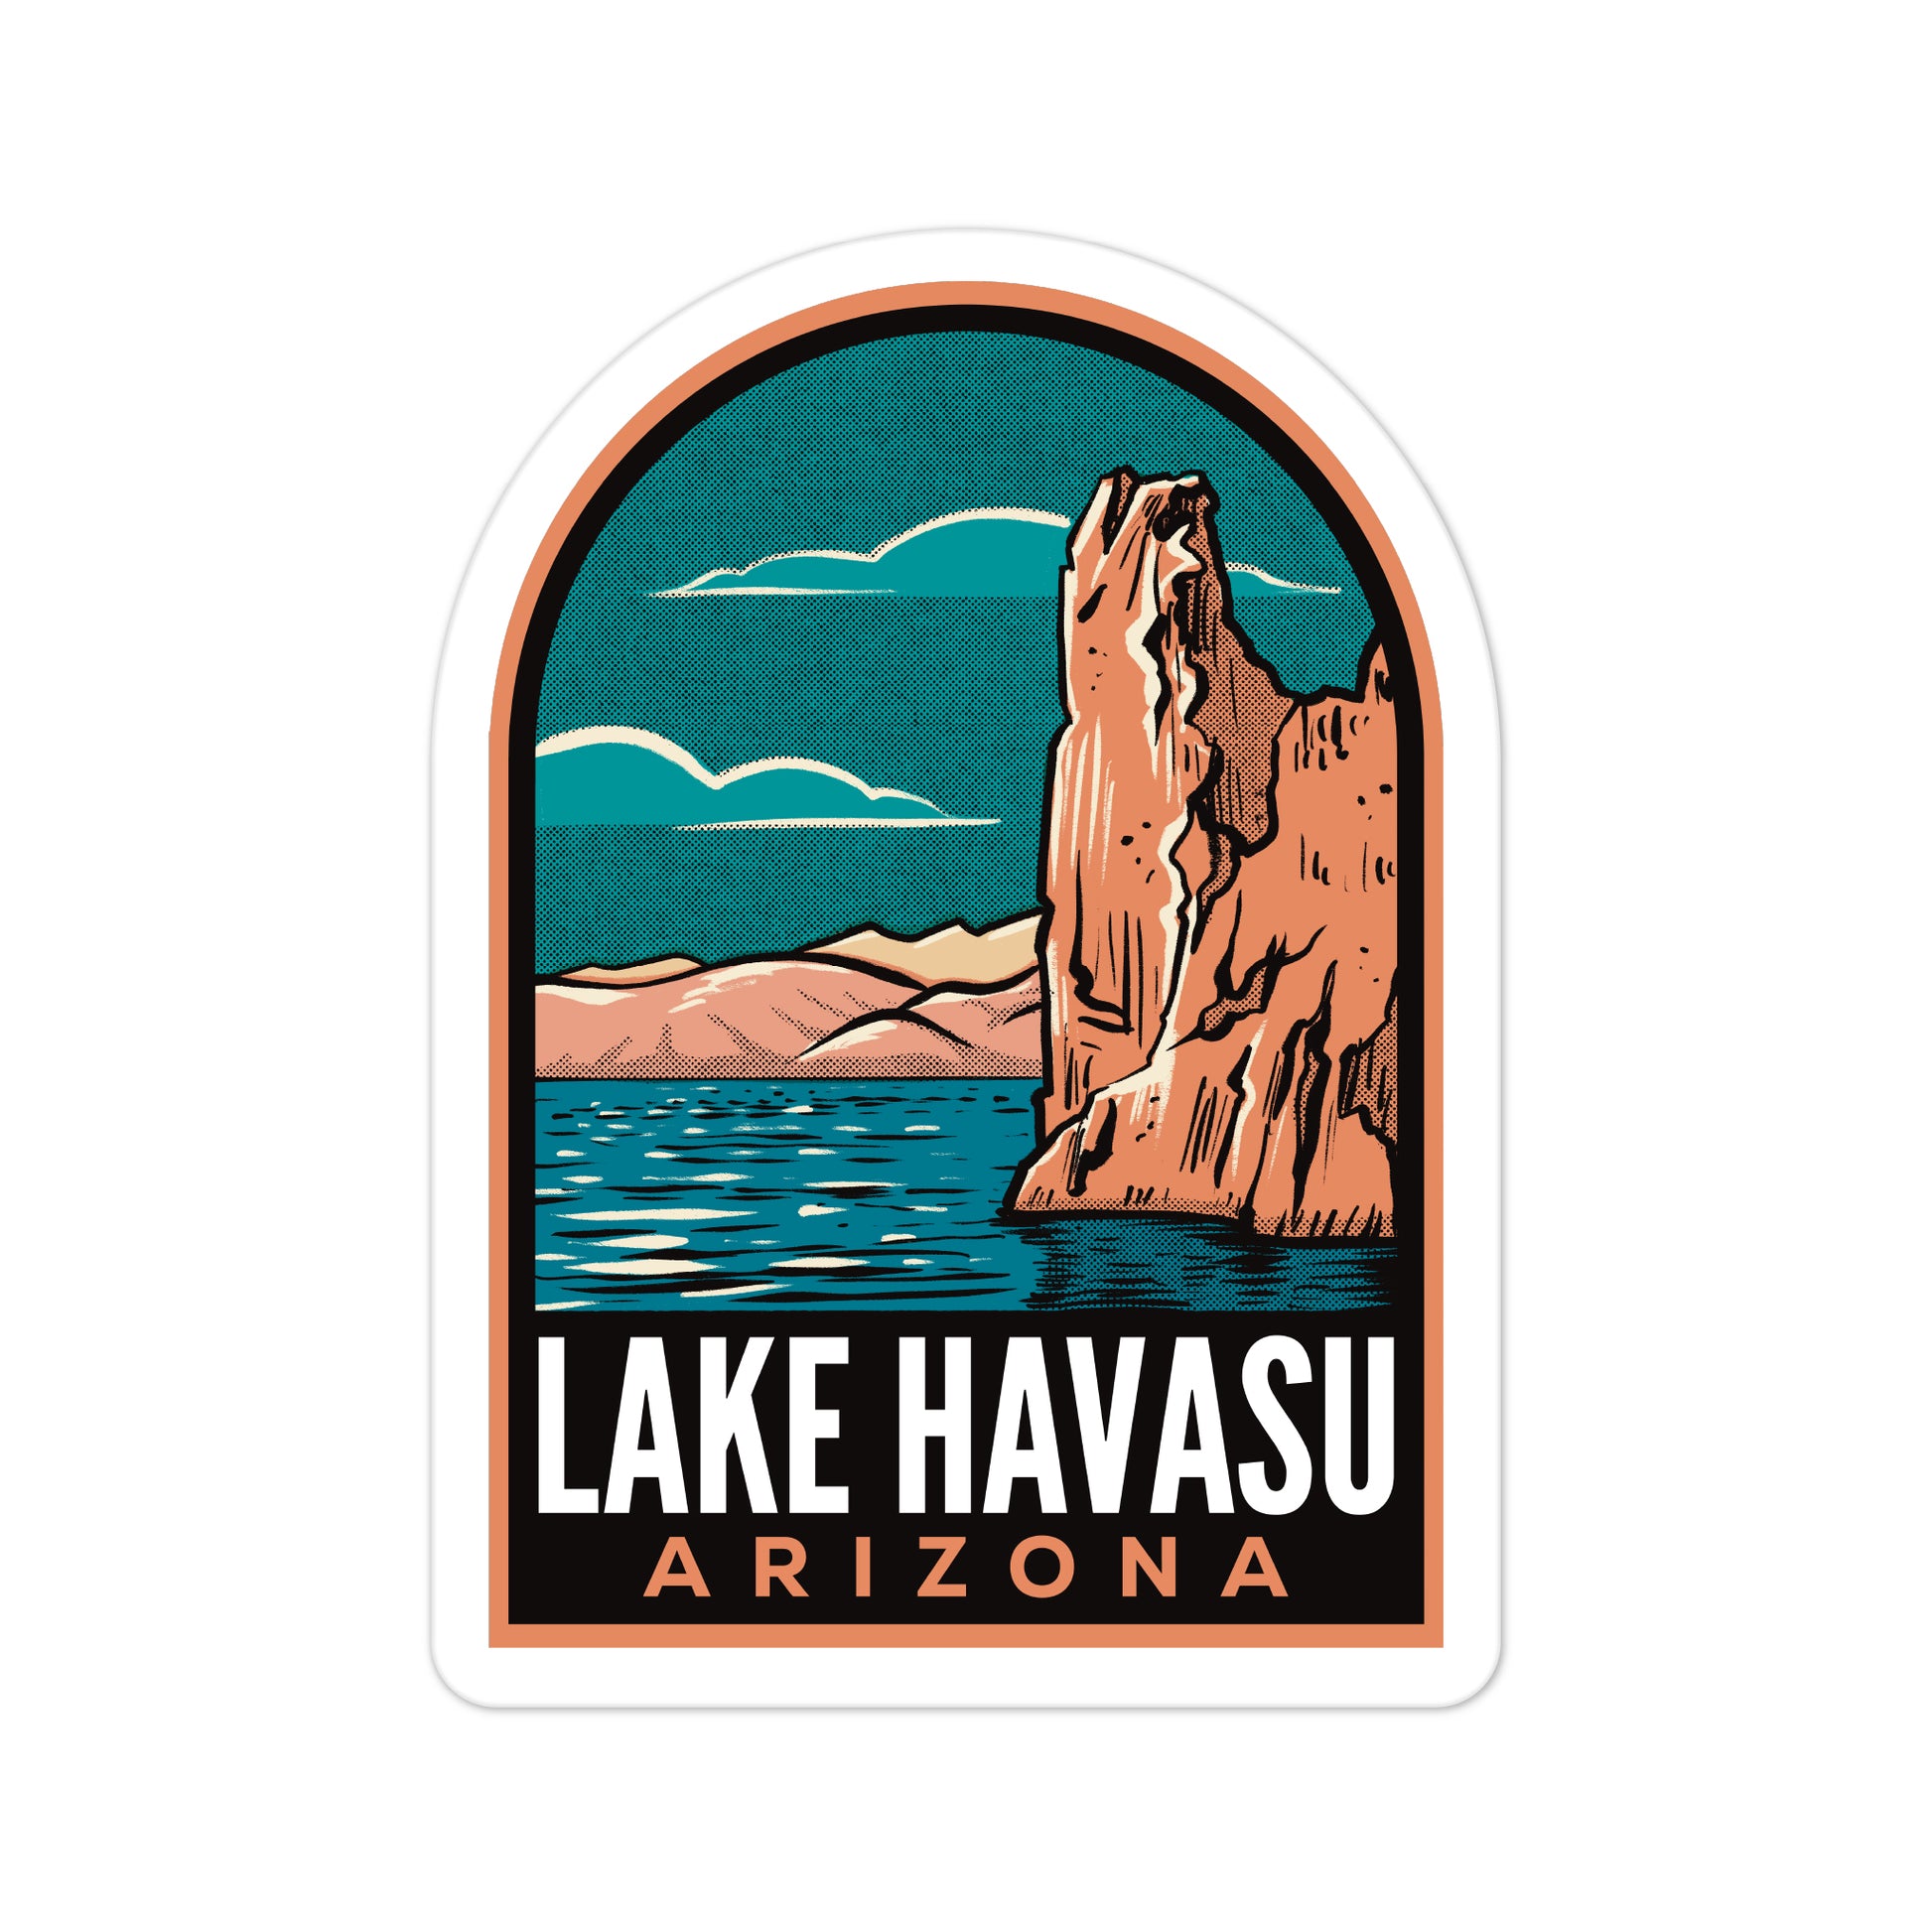 A sticker of Lake Havasu Arizona